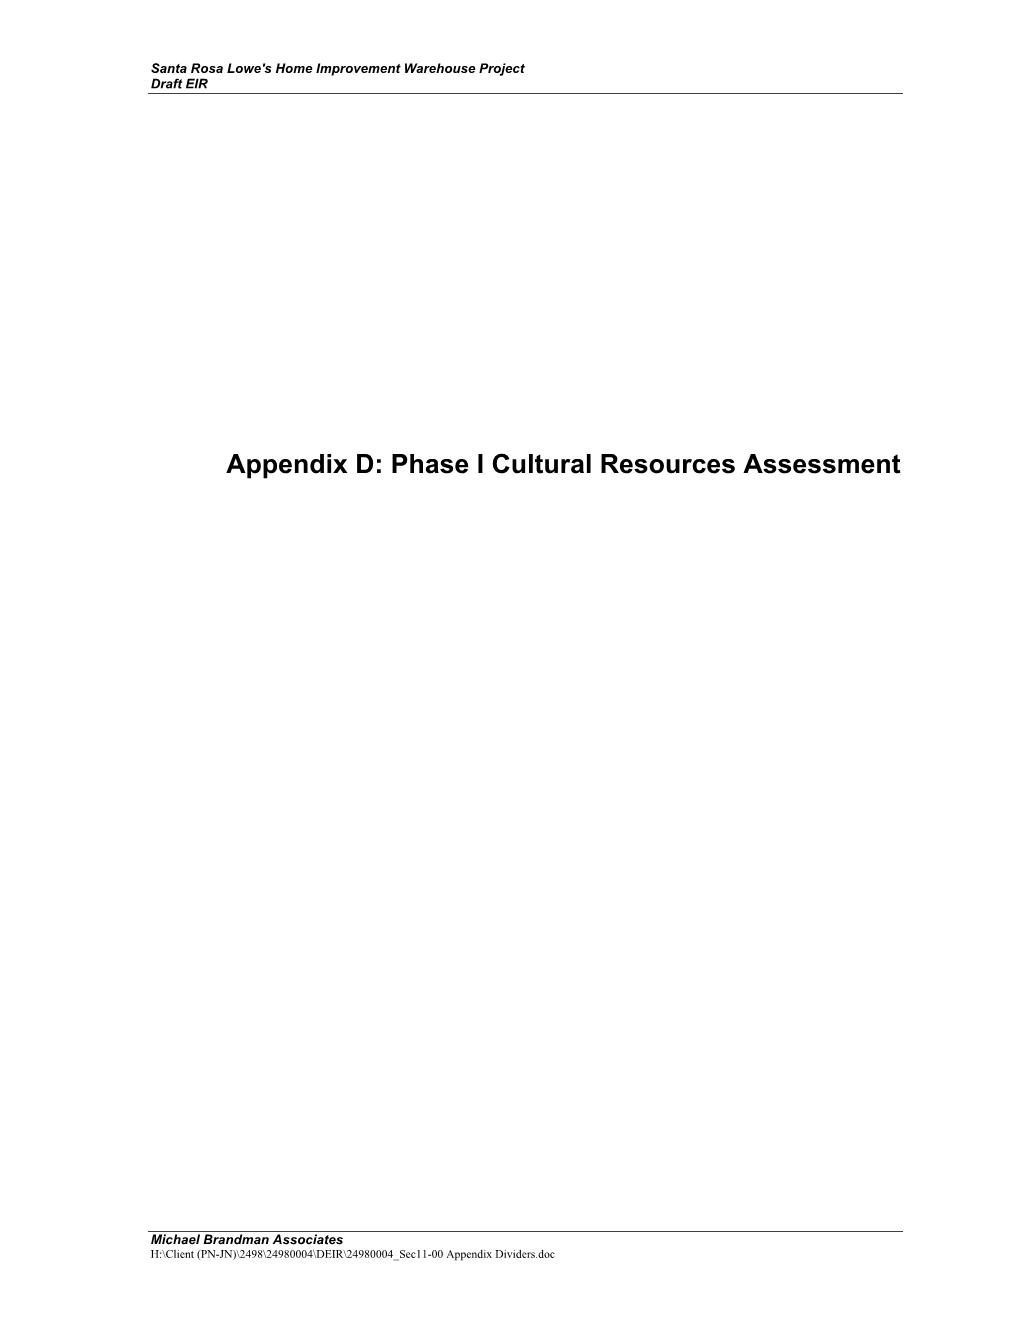 Appendix D: Phase I Cultural Resources Assessment